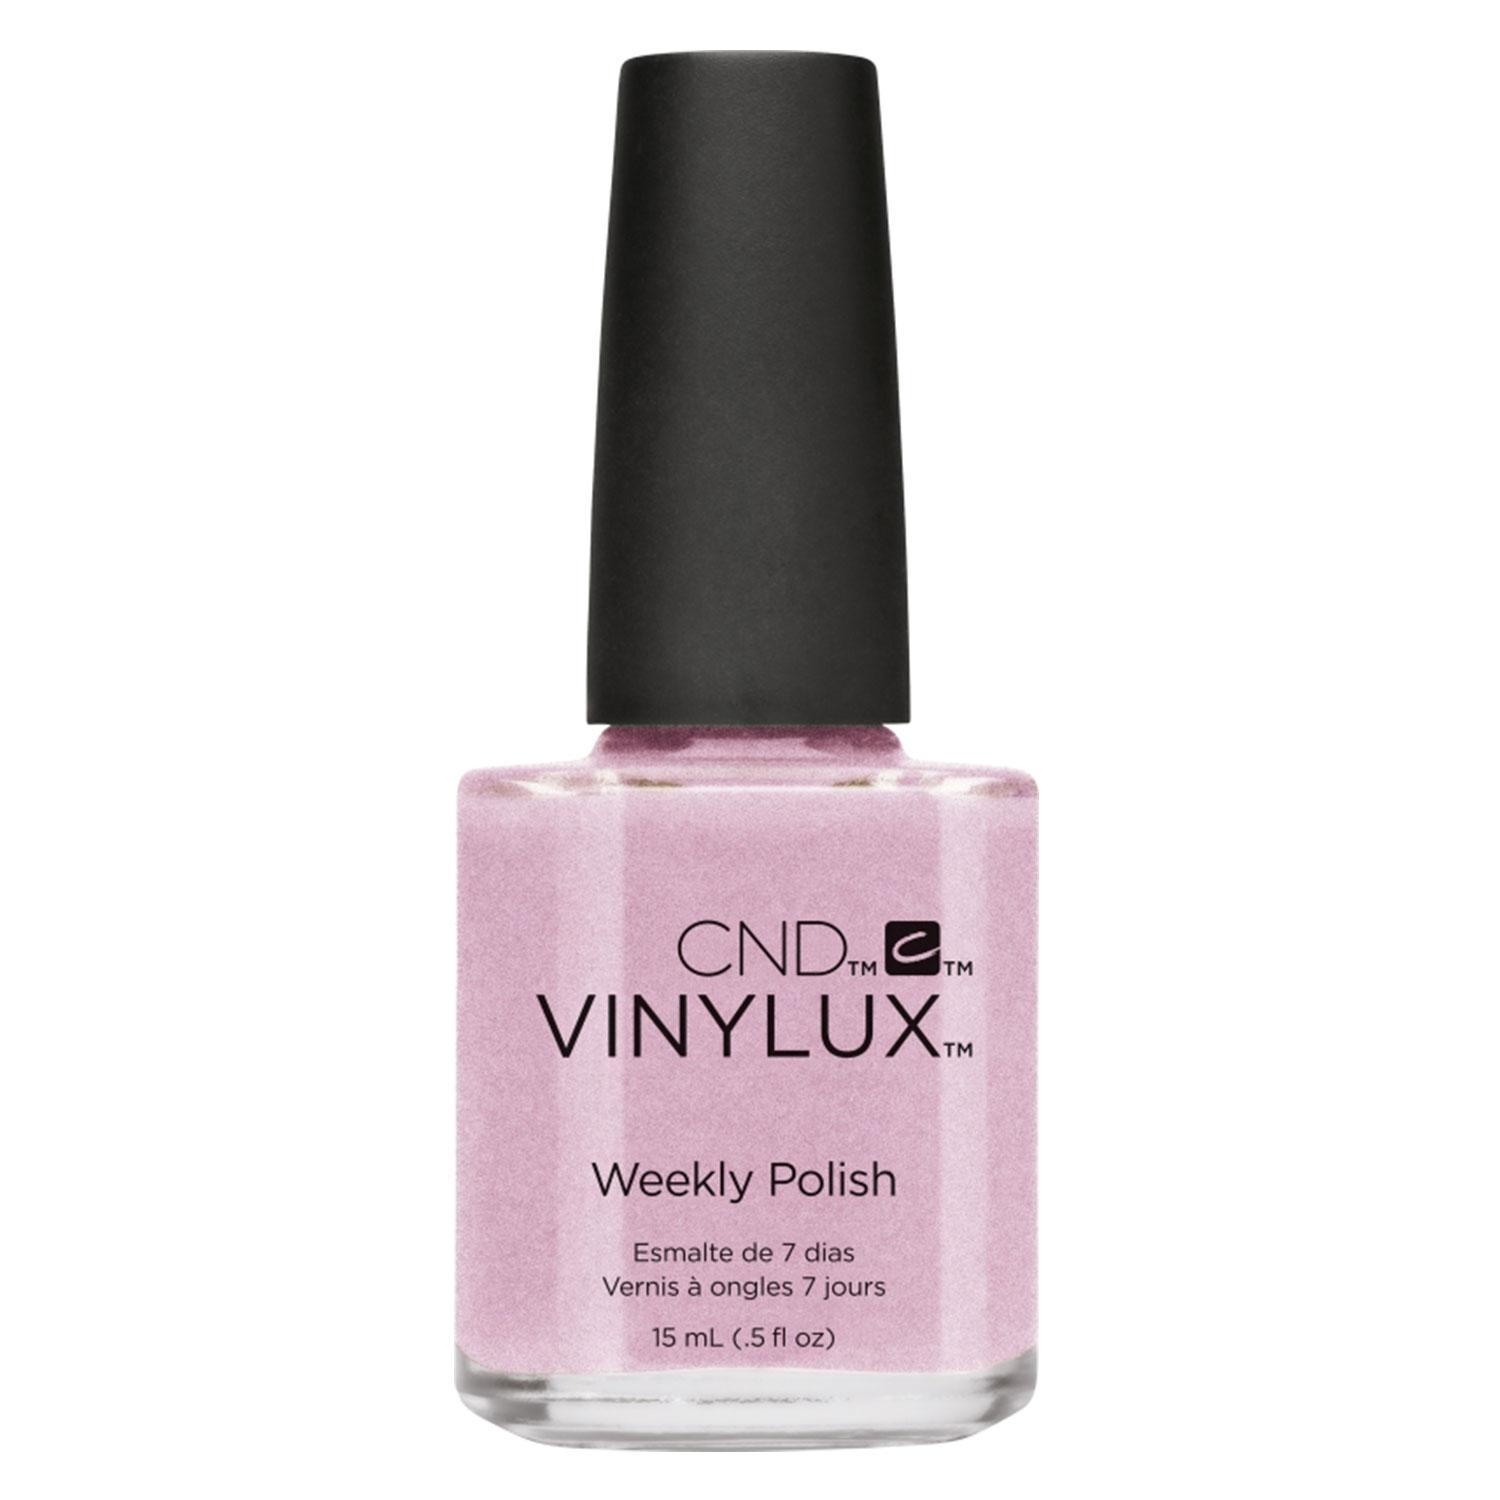 Vinylux - Weekly Polish Lavender Lace 216